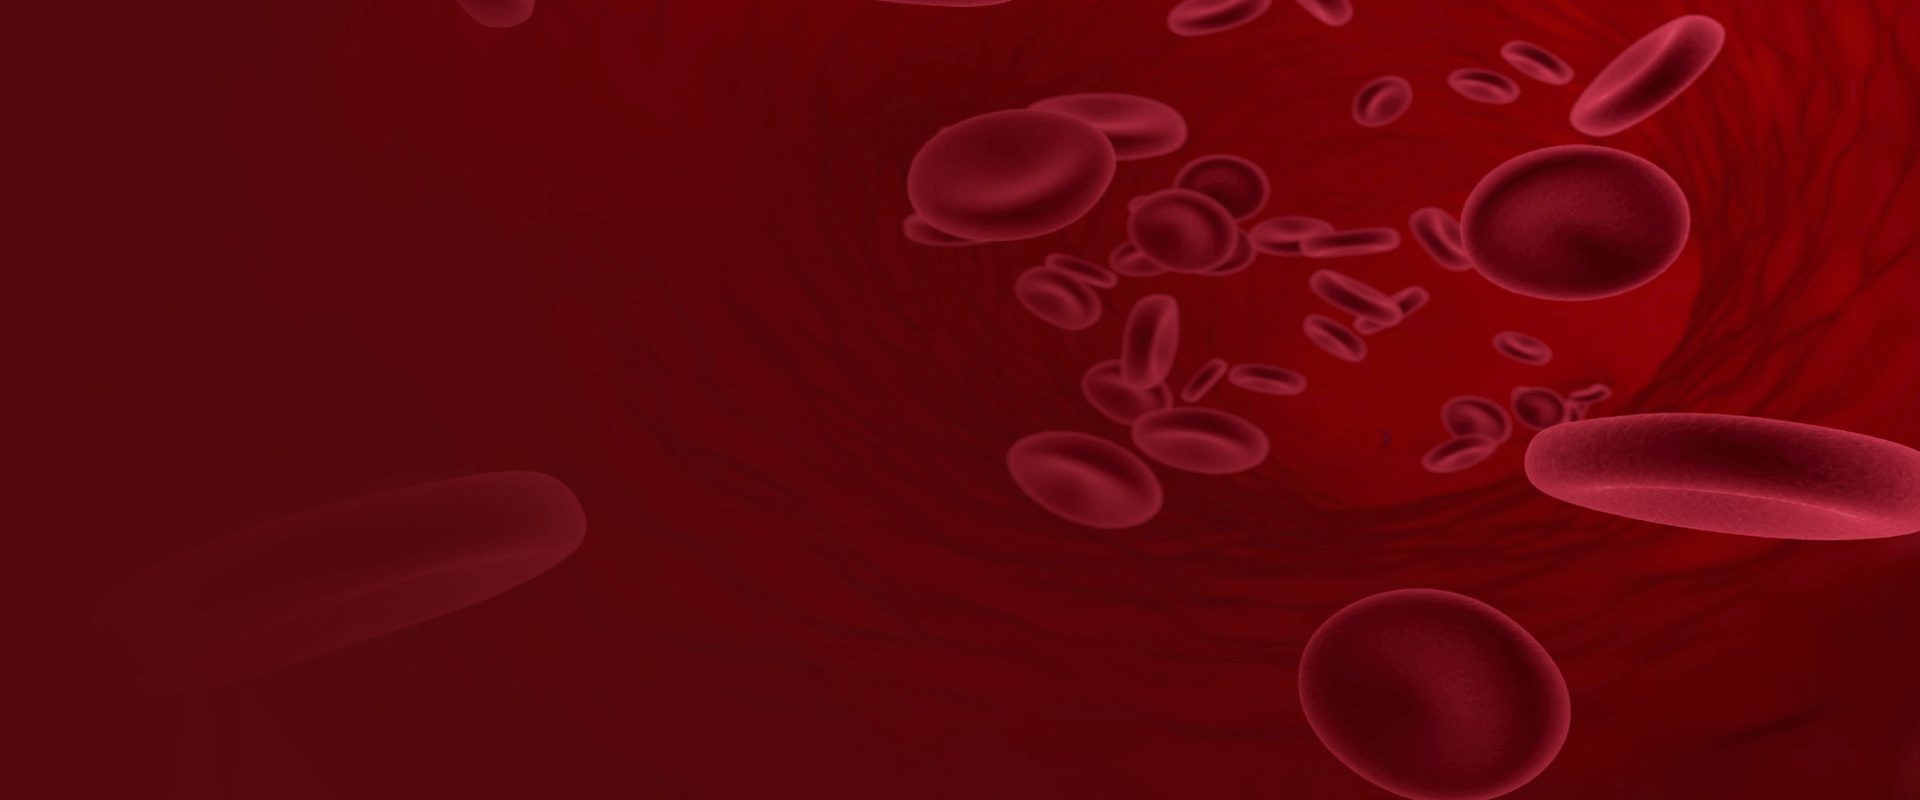 revista-rai-inmunohematologia-sangre-salud-annar-cadena-de-adn-en-torrente-sanguineo